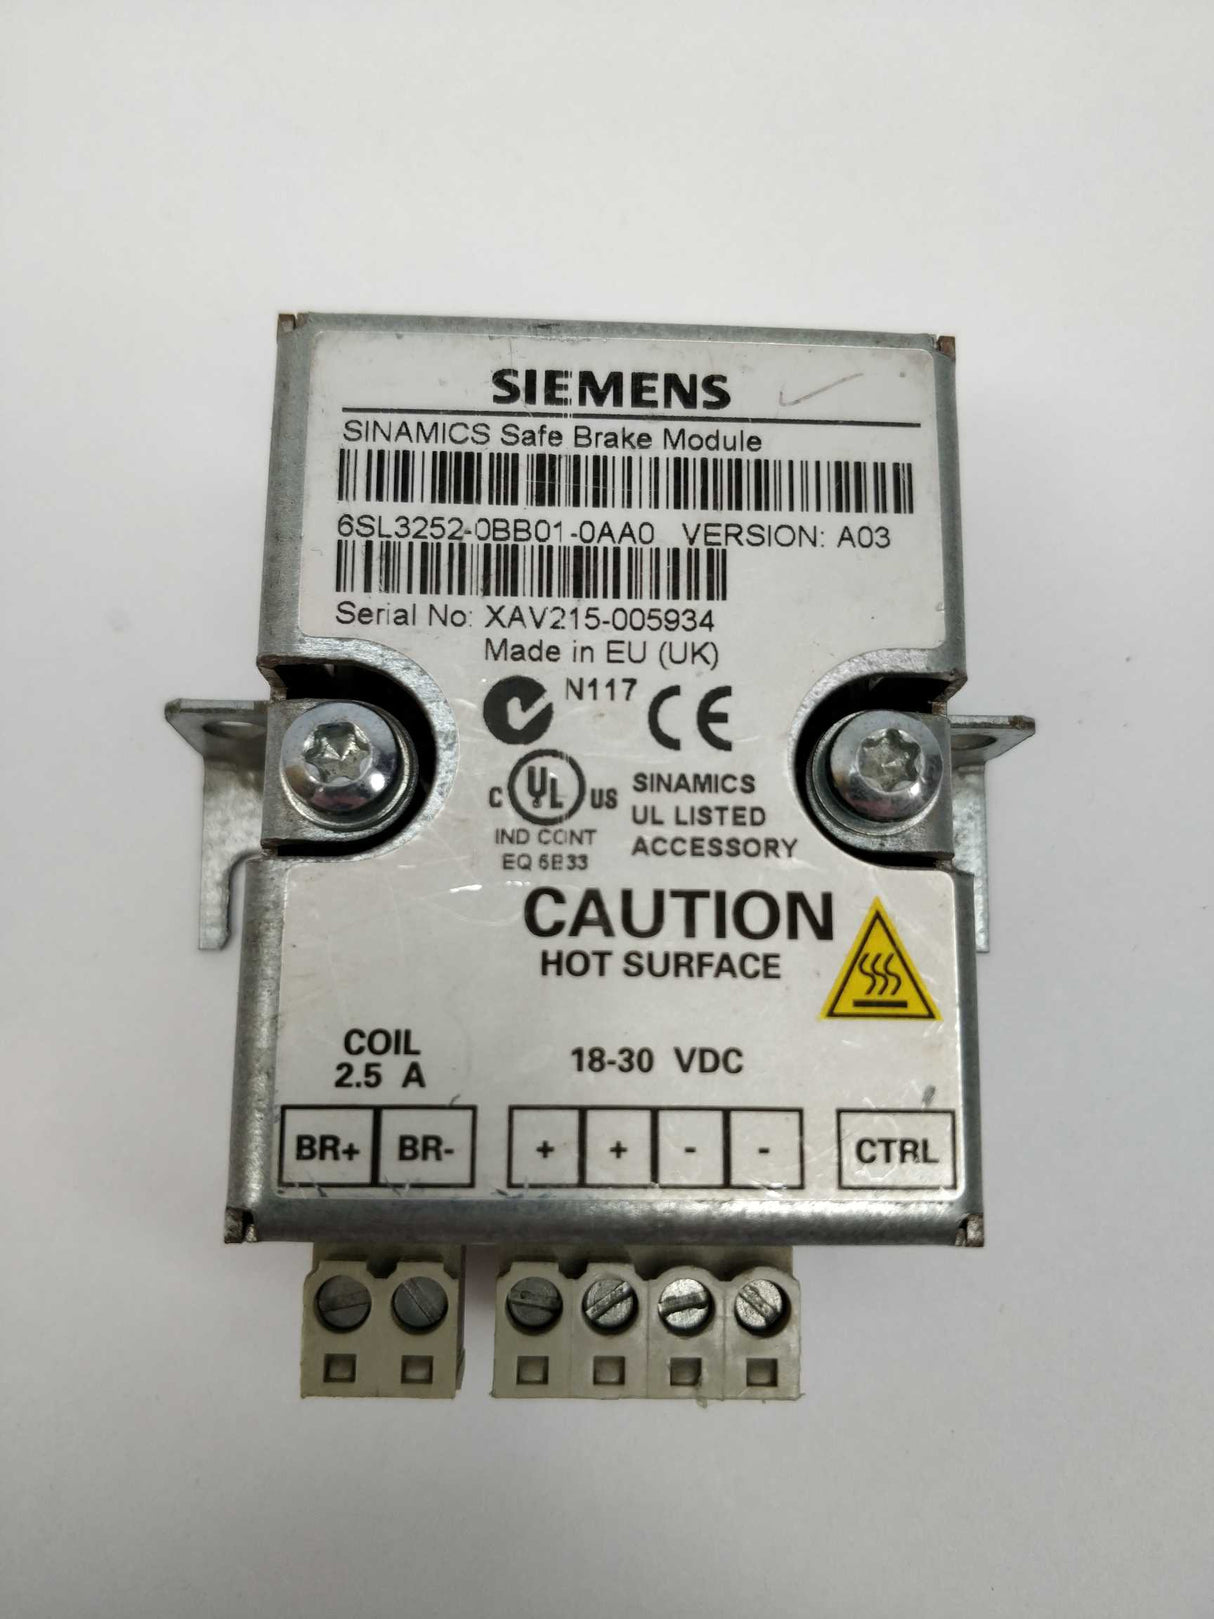 Siemens 6SL3252-0BB01-0AA0 Sinamics safe brake module verA03